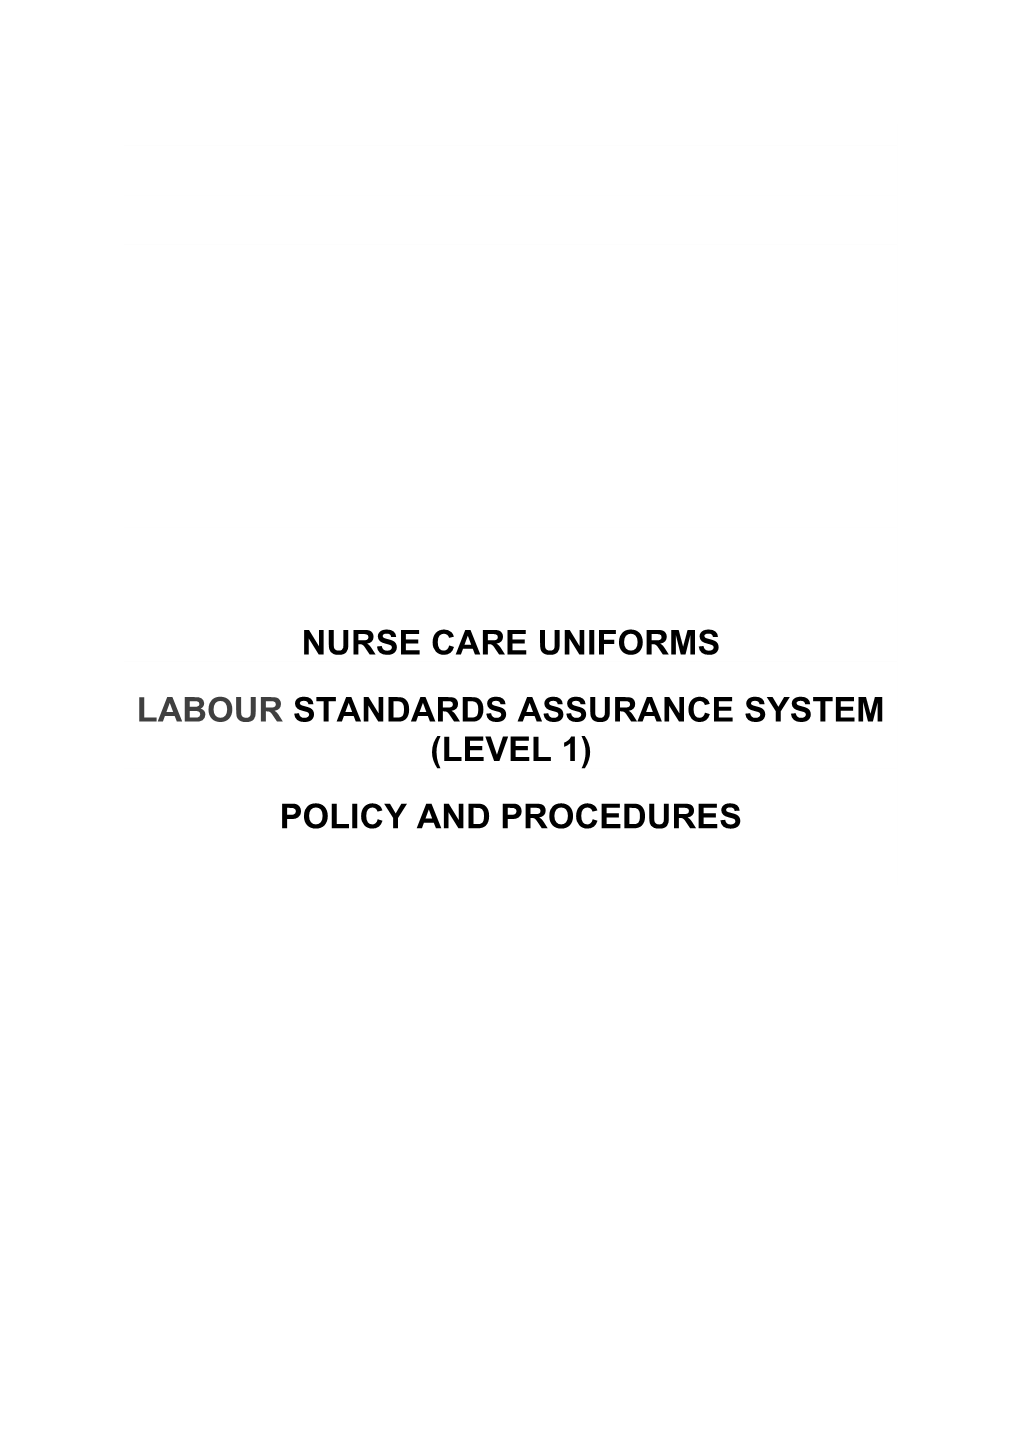 Labour Standards Assurance System (Level 1)